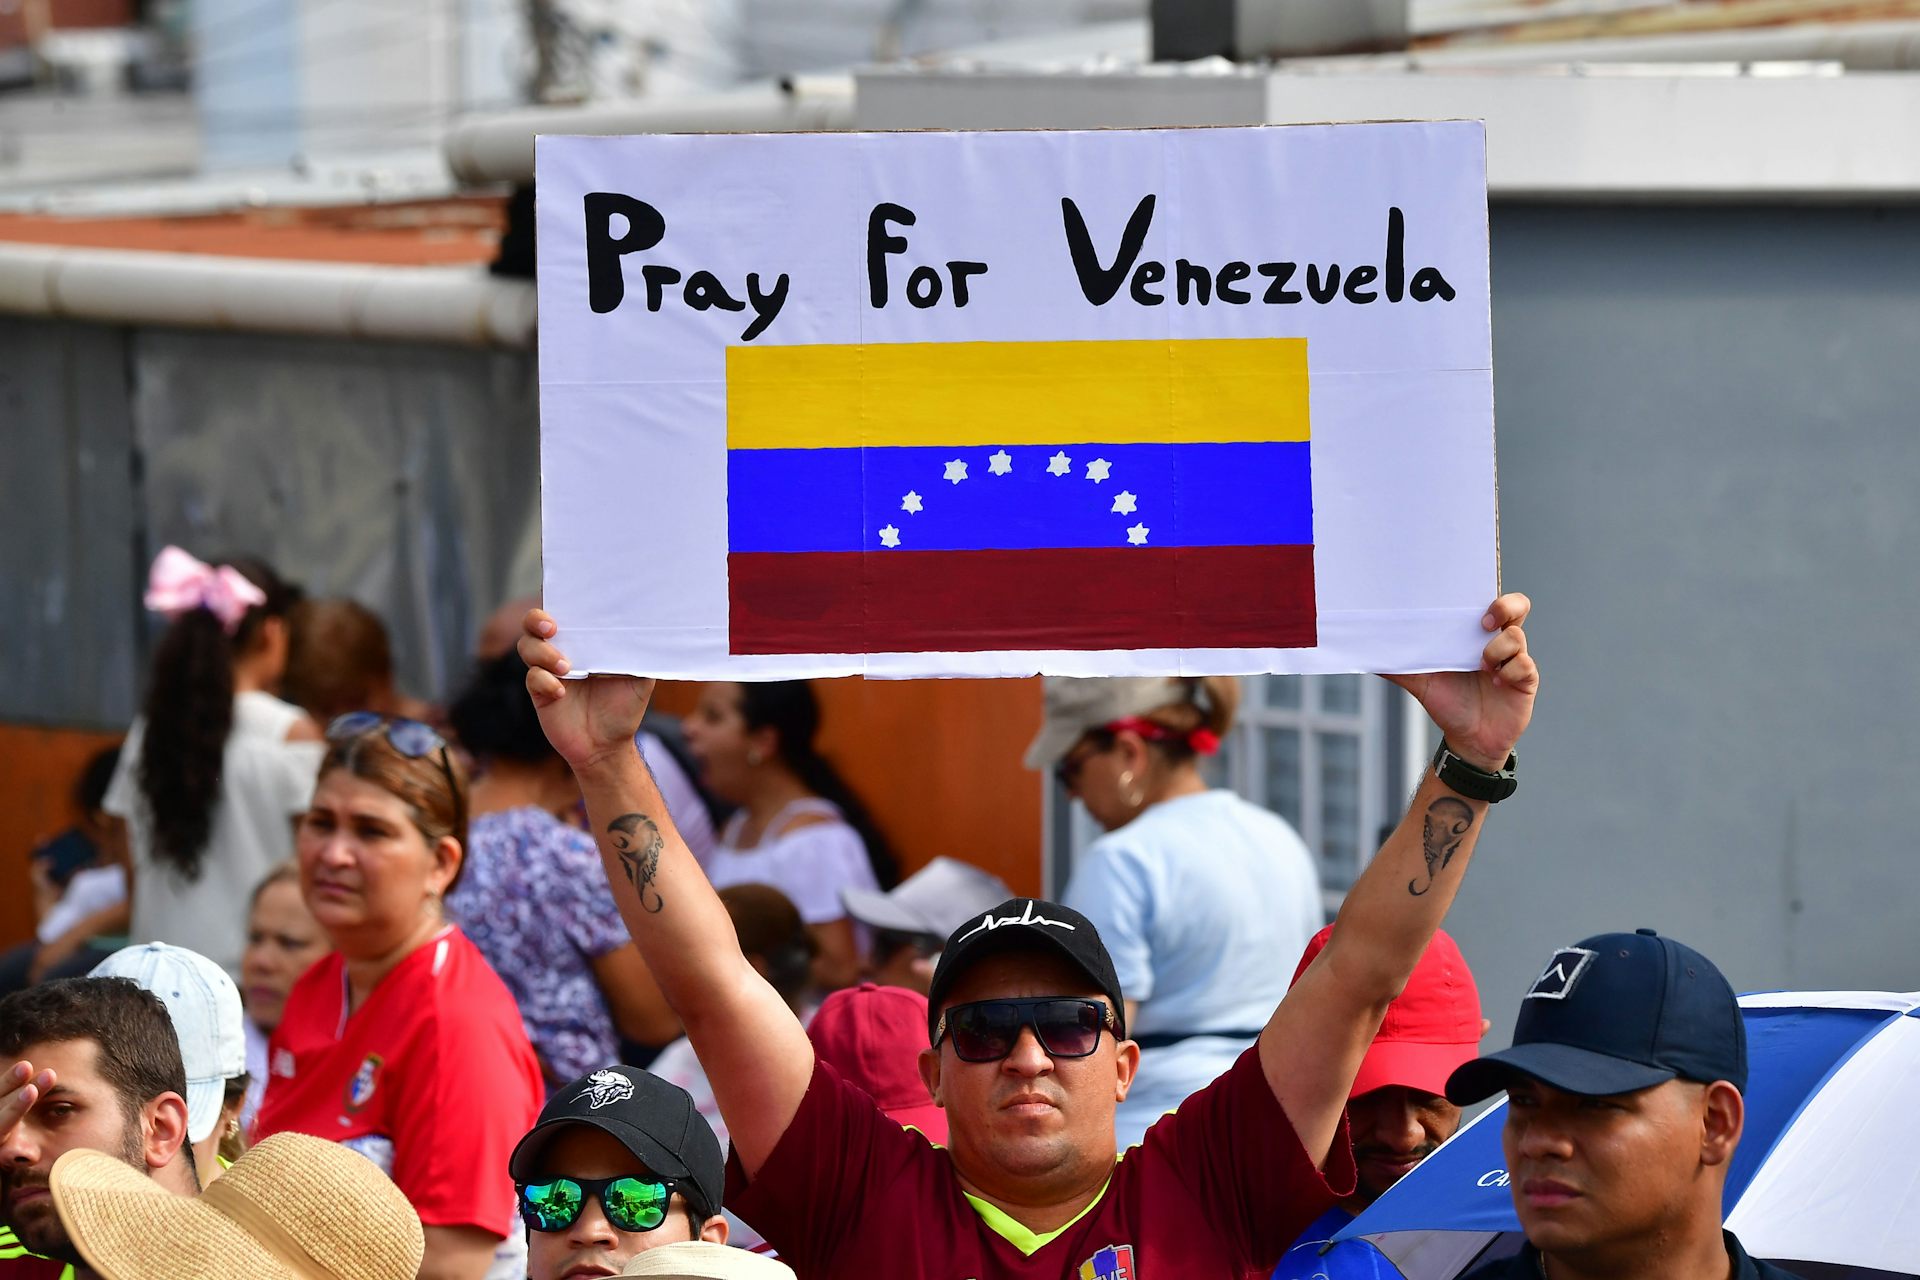 Catholic Church Urges Venezuela to Unite Against Coronavirus